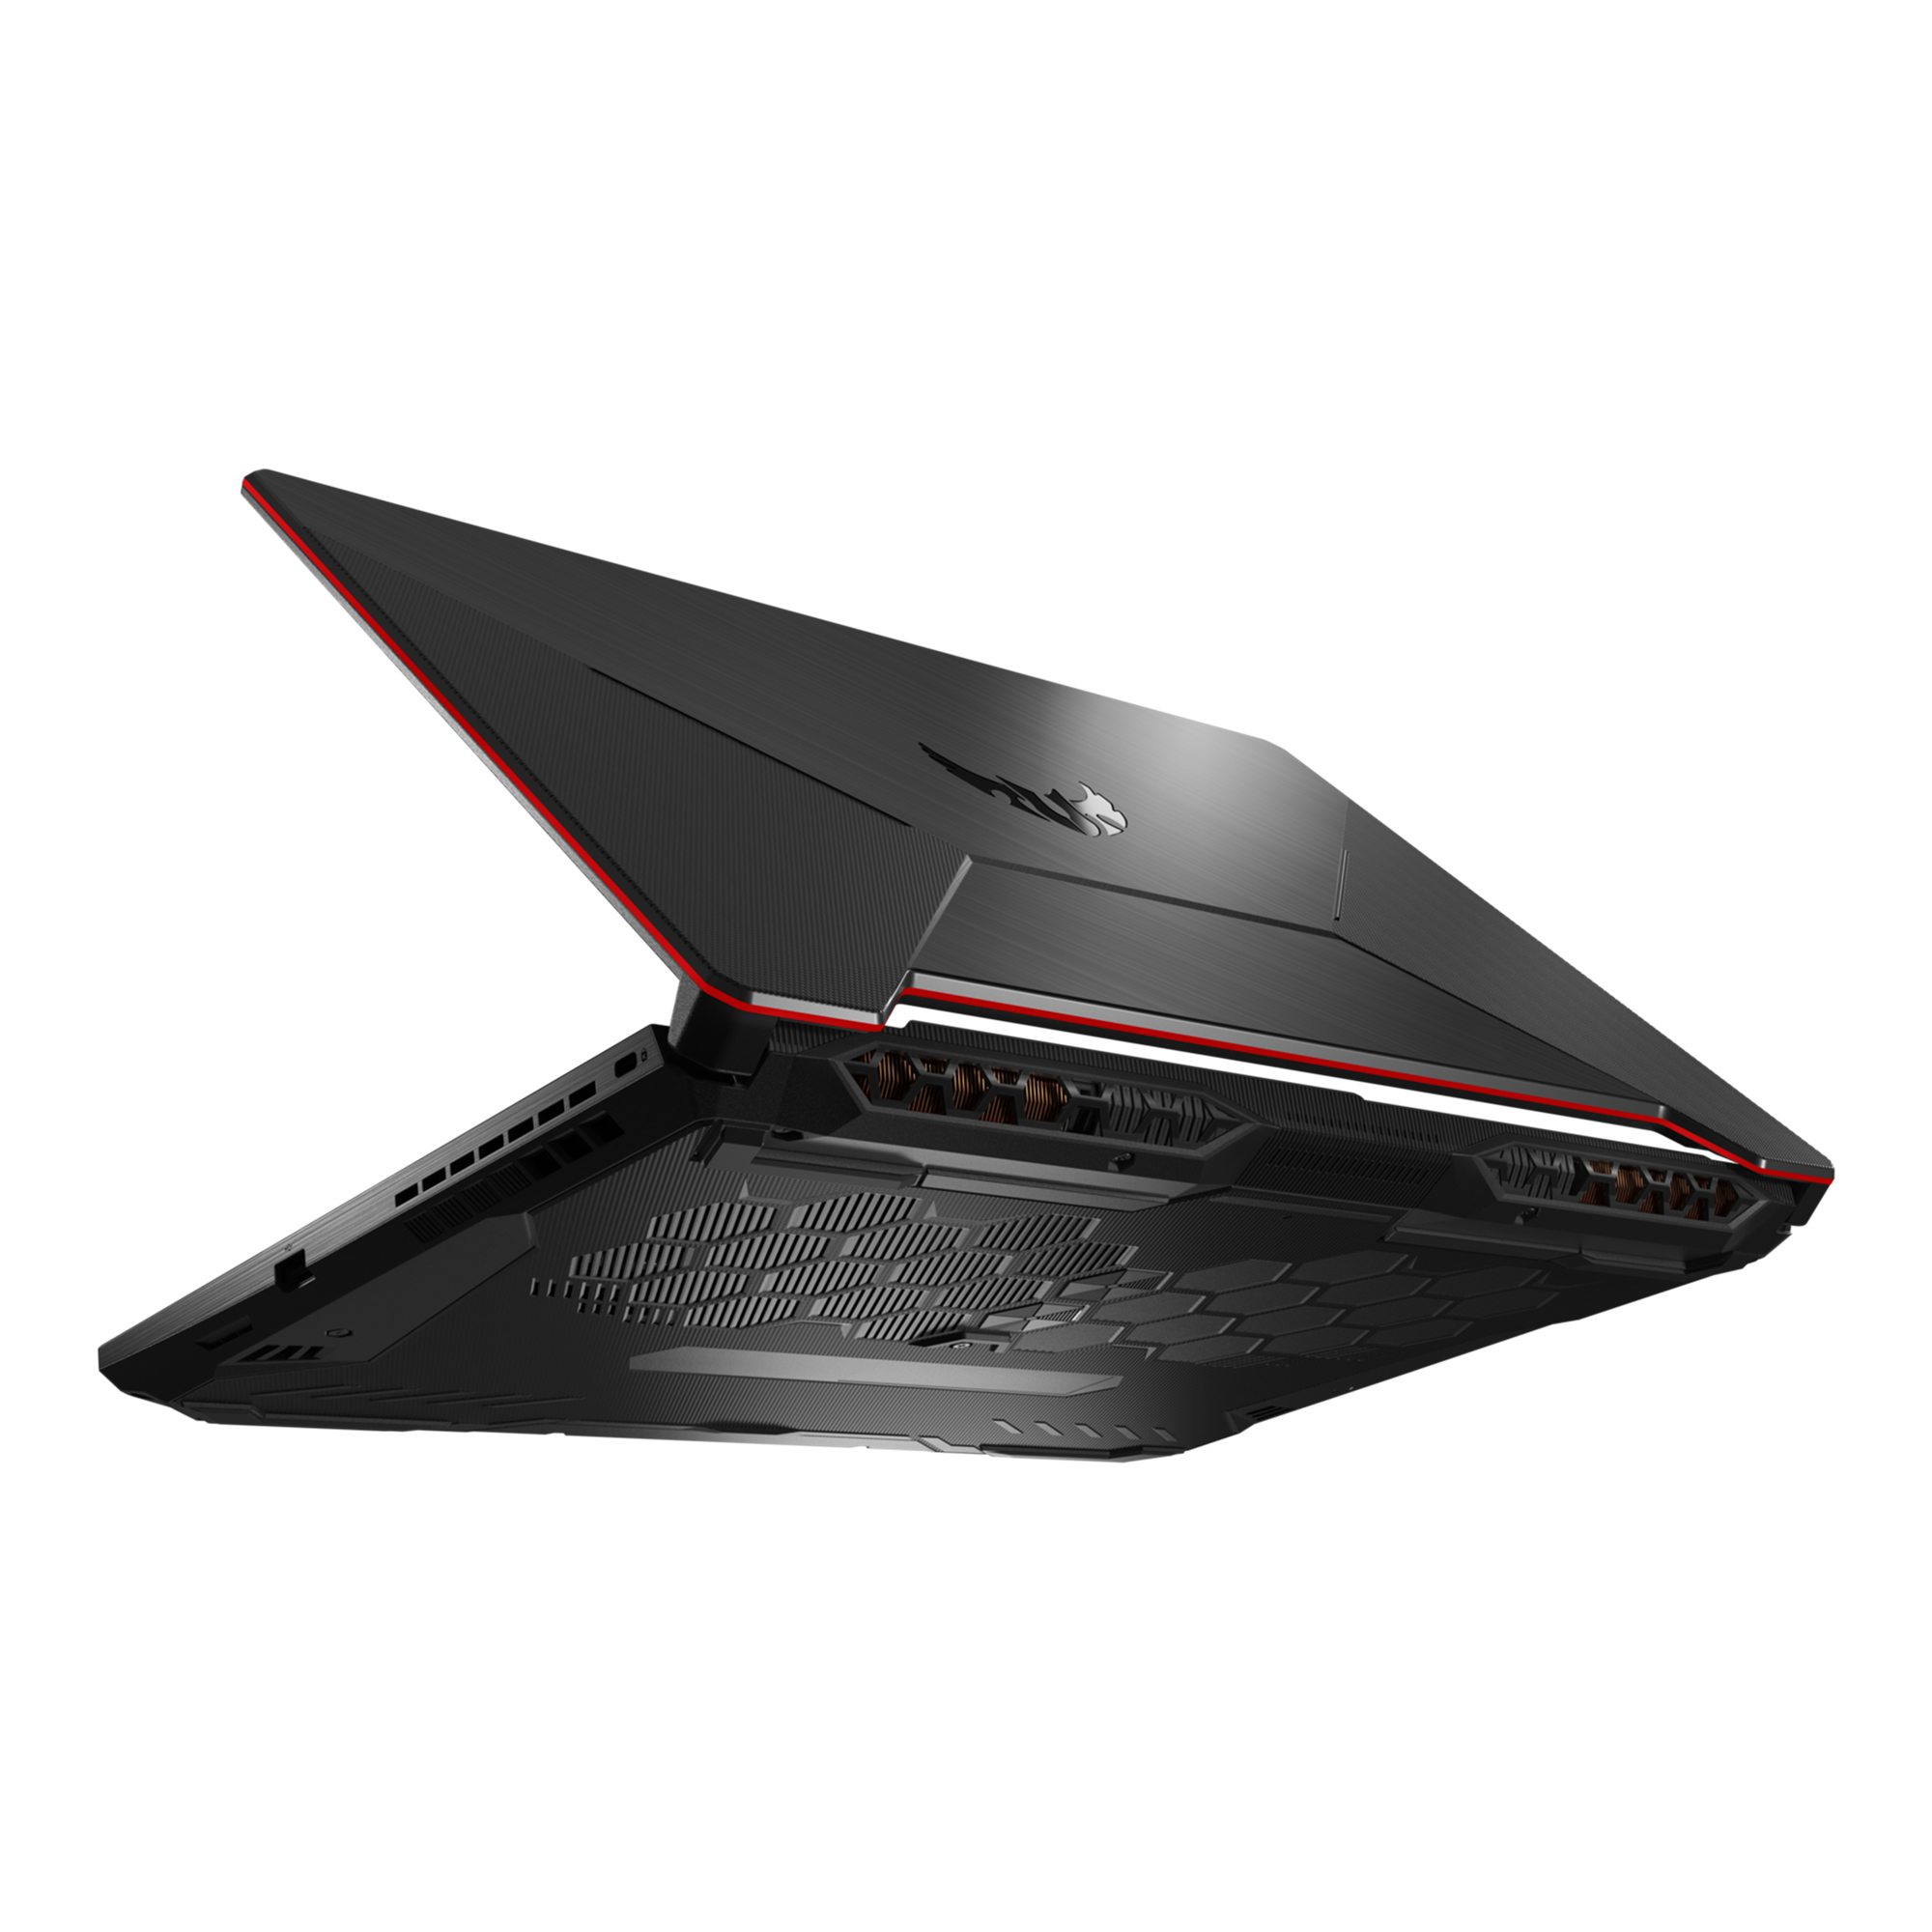 PC Portable ASUS TUF Gaming F15 i5 10è Gén 8Go GTX1650